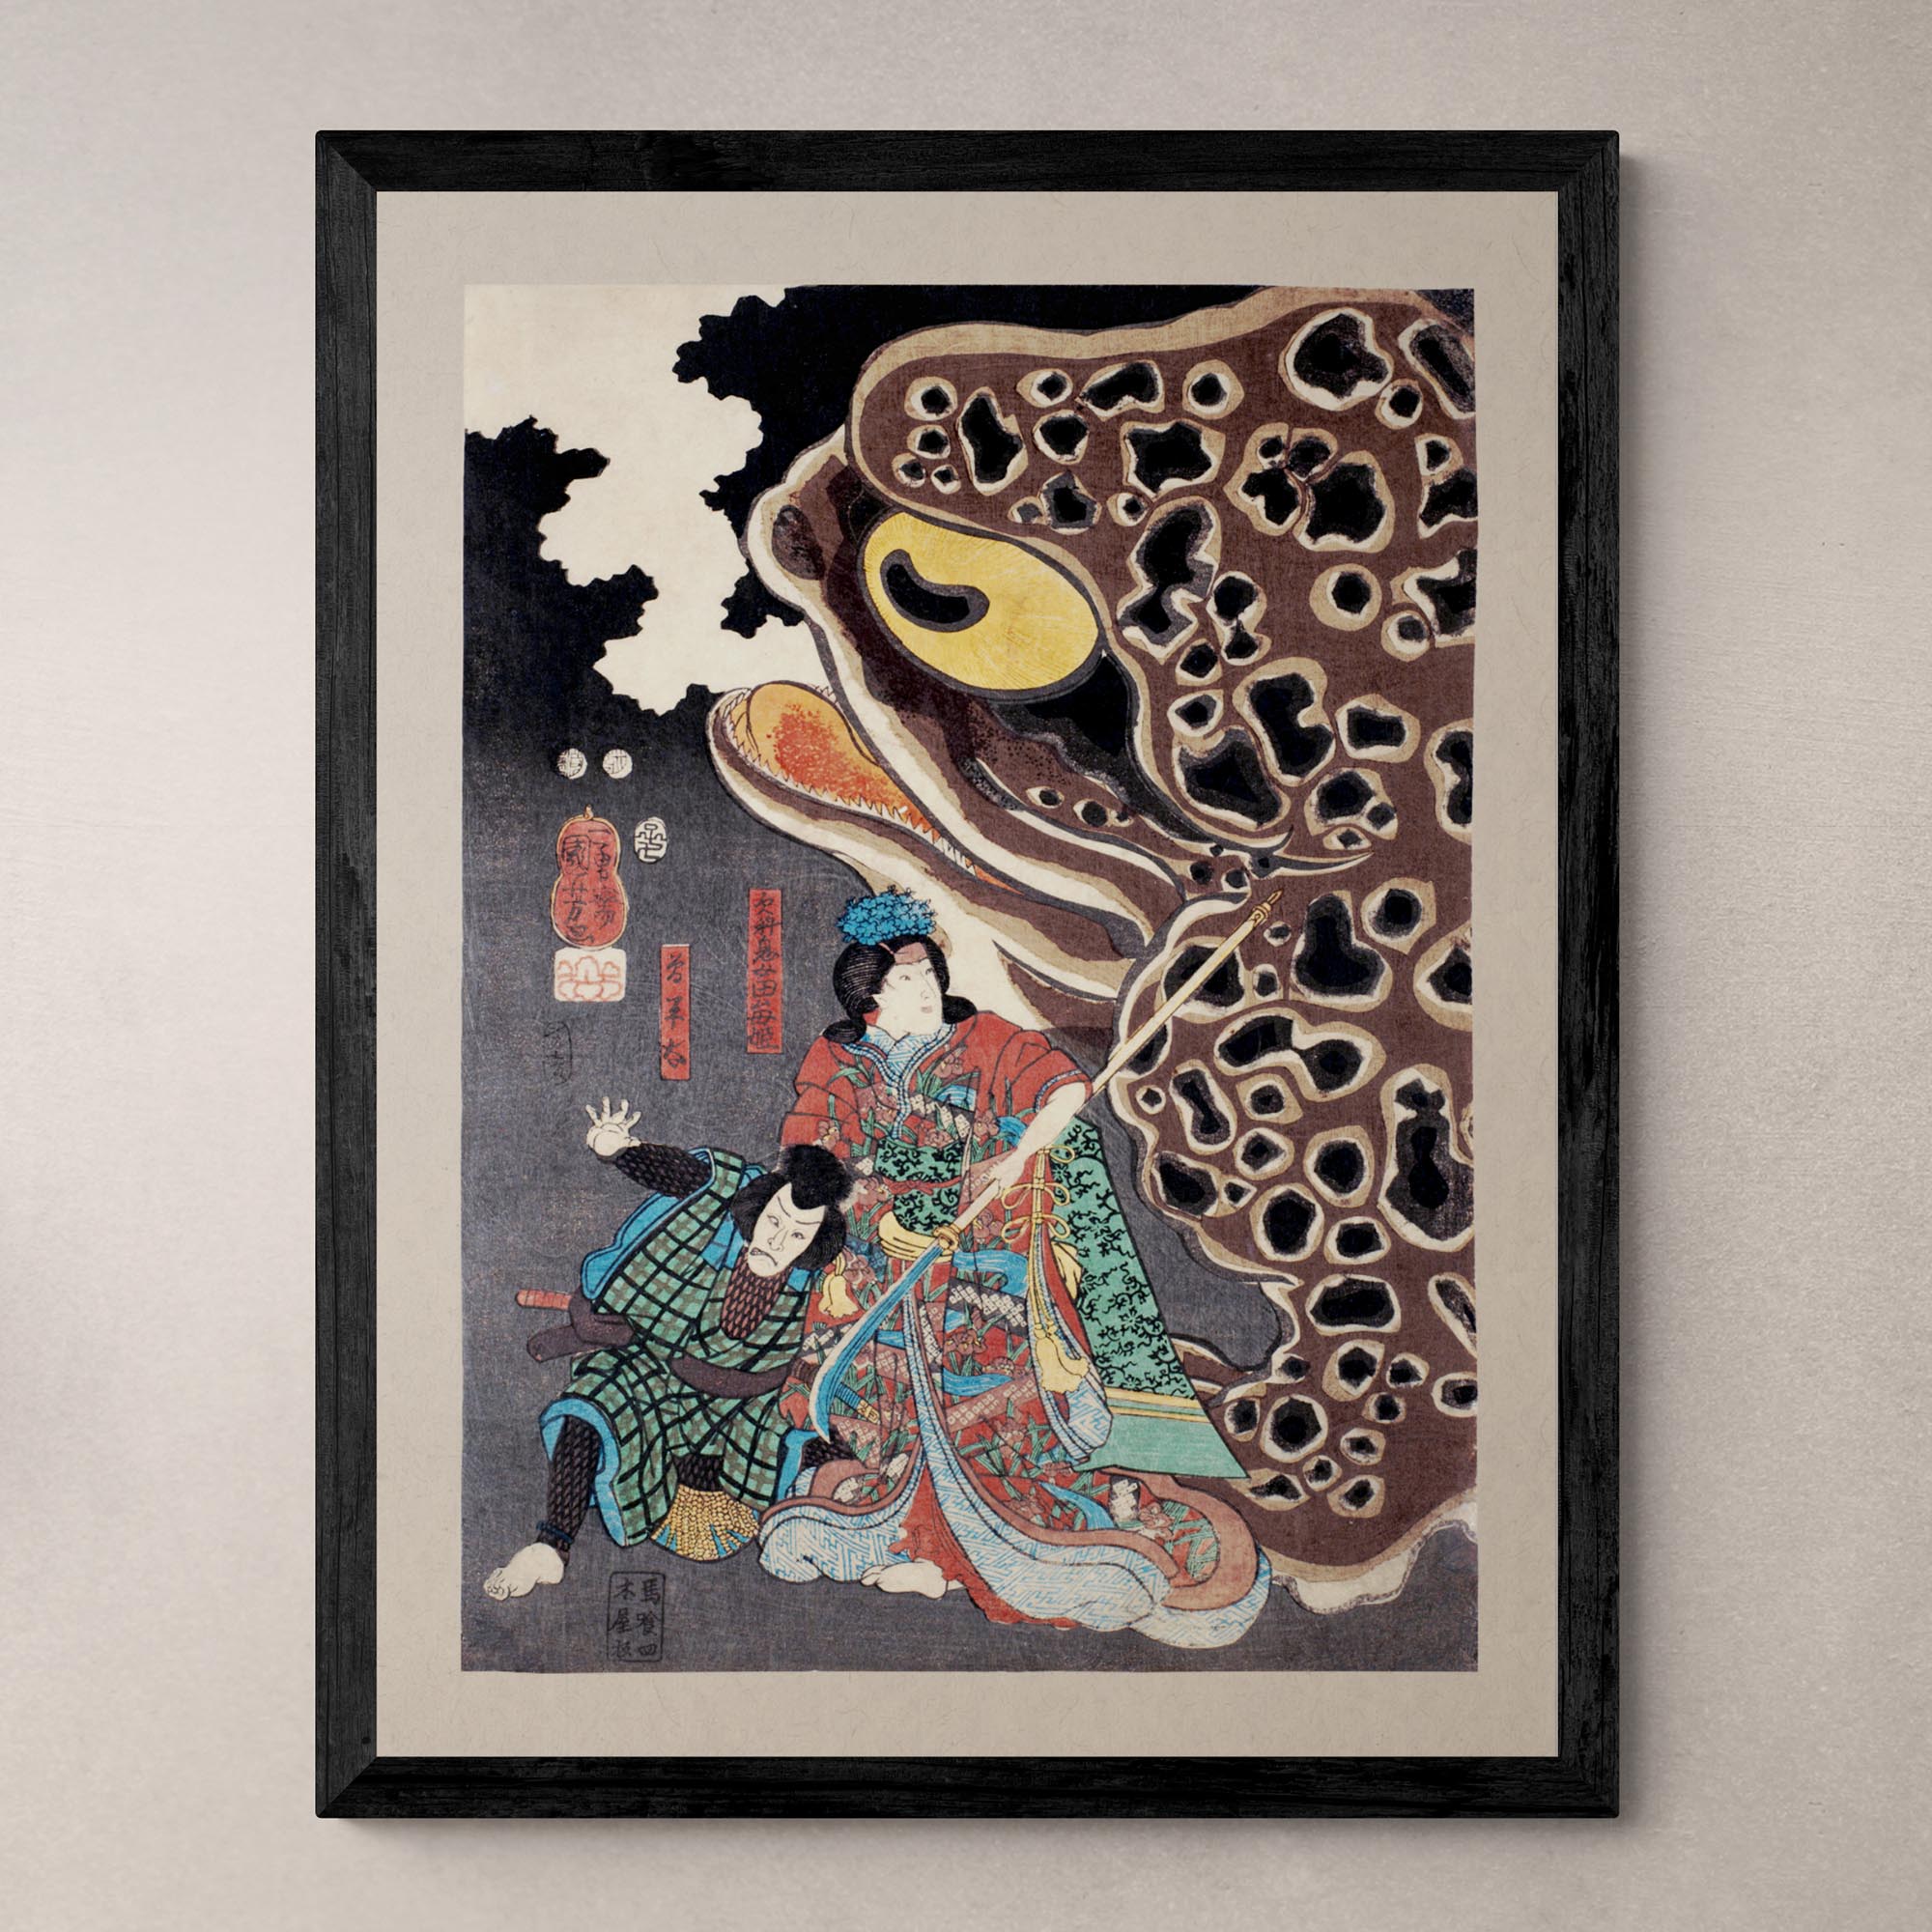 giclee 6"x8" Utagawa Kuniyoshi: Jiraiya fighting Orochimaru Japanese Ukiyo-e Samurai Ronin Frog Toad Decor Antique Asian Fine Art Print